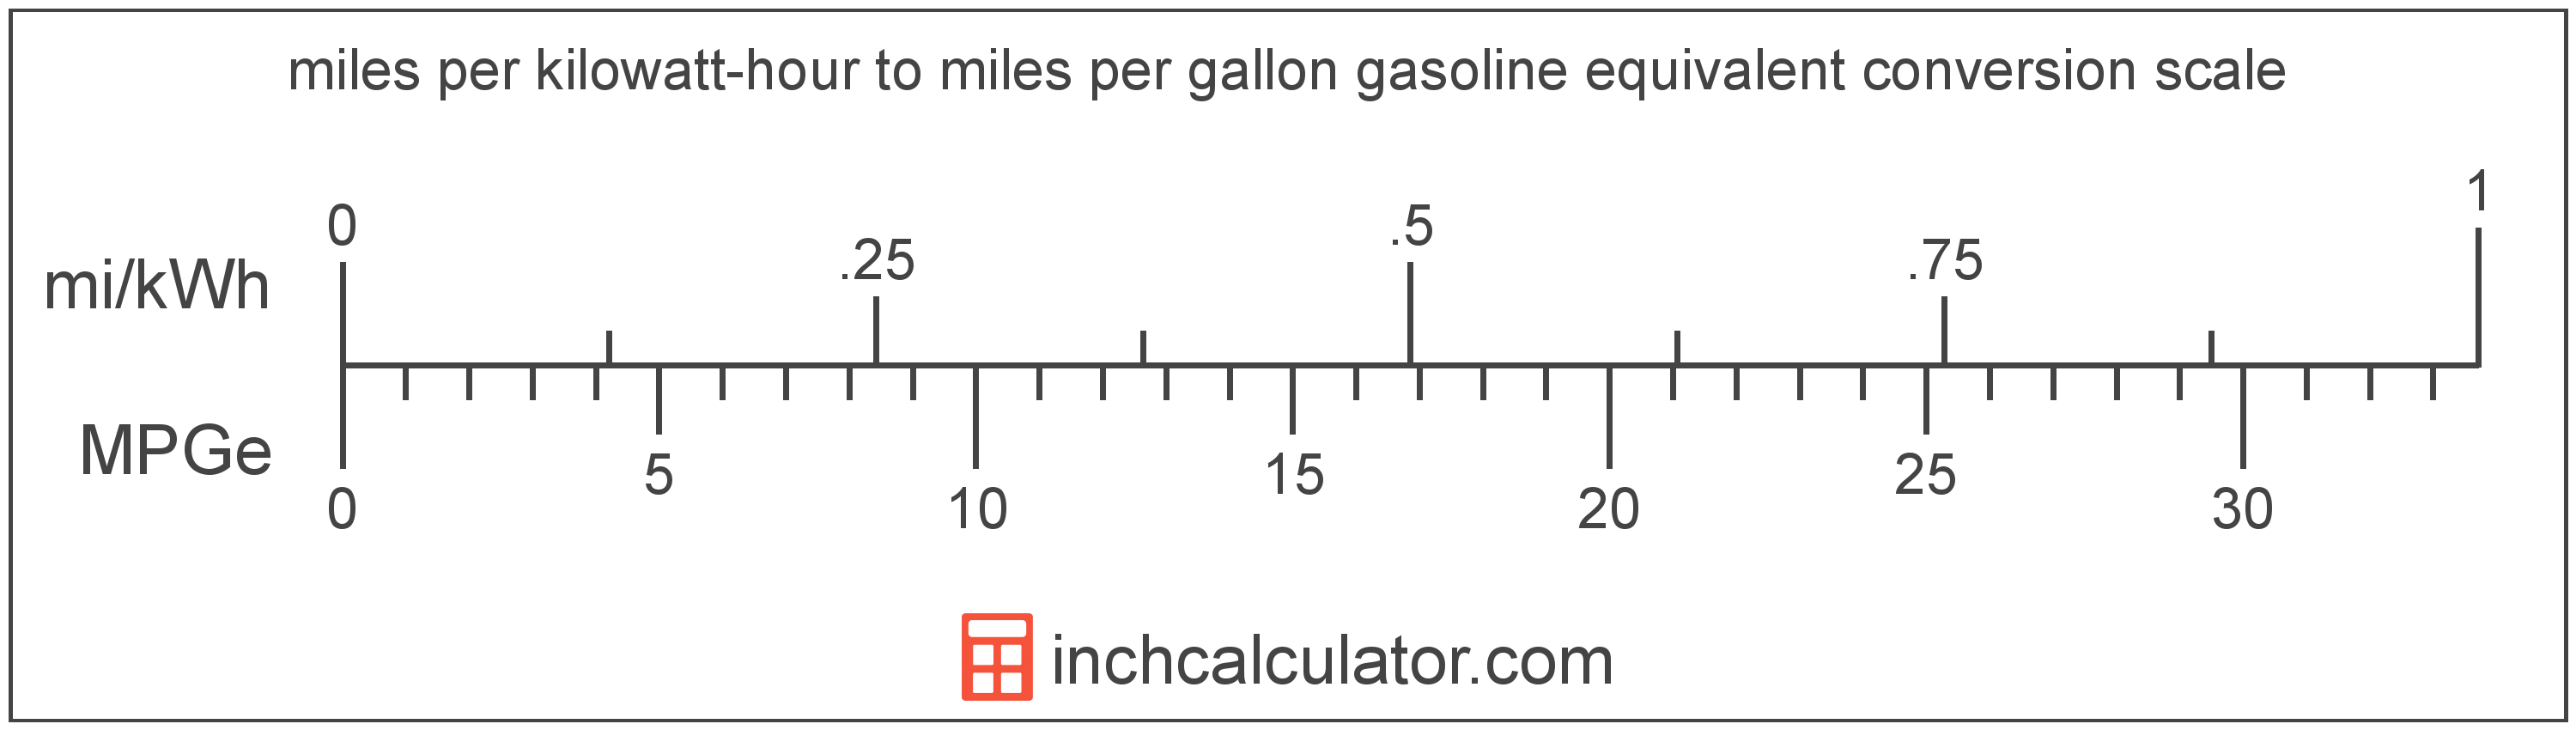 conversion scale showing miles per kilowatt-hour and equivalent miles per gallon gasoline equivalent electric car efficiency values